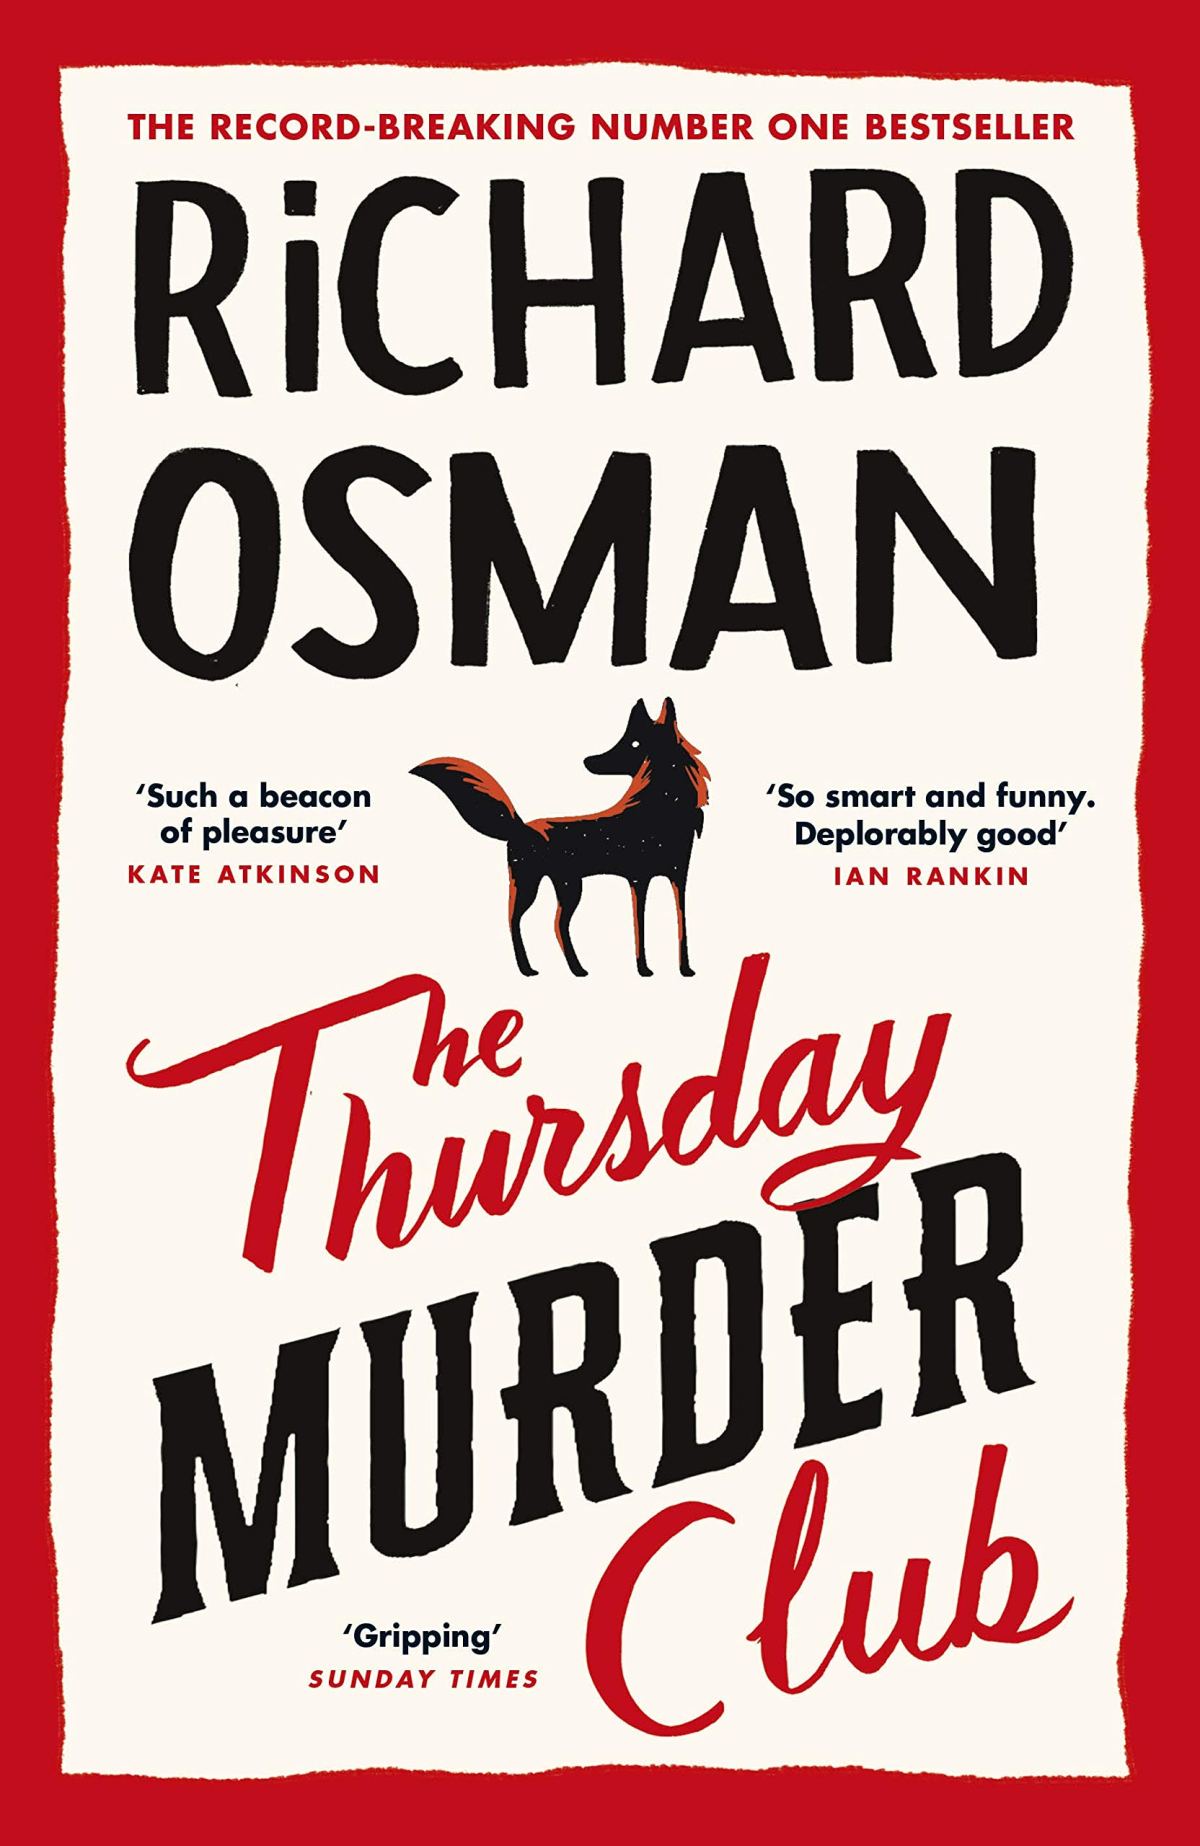 Book 64 – The Thursday Murder Club by Richard Osman